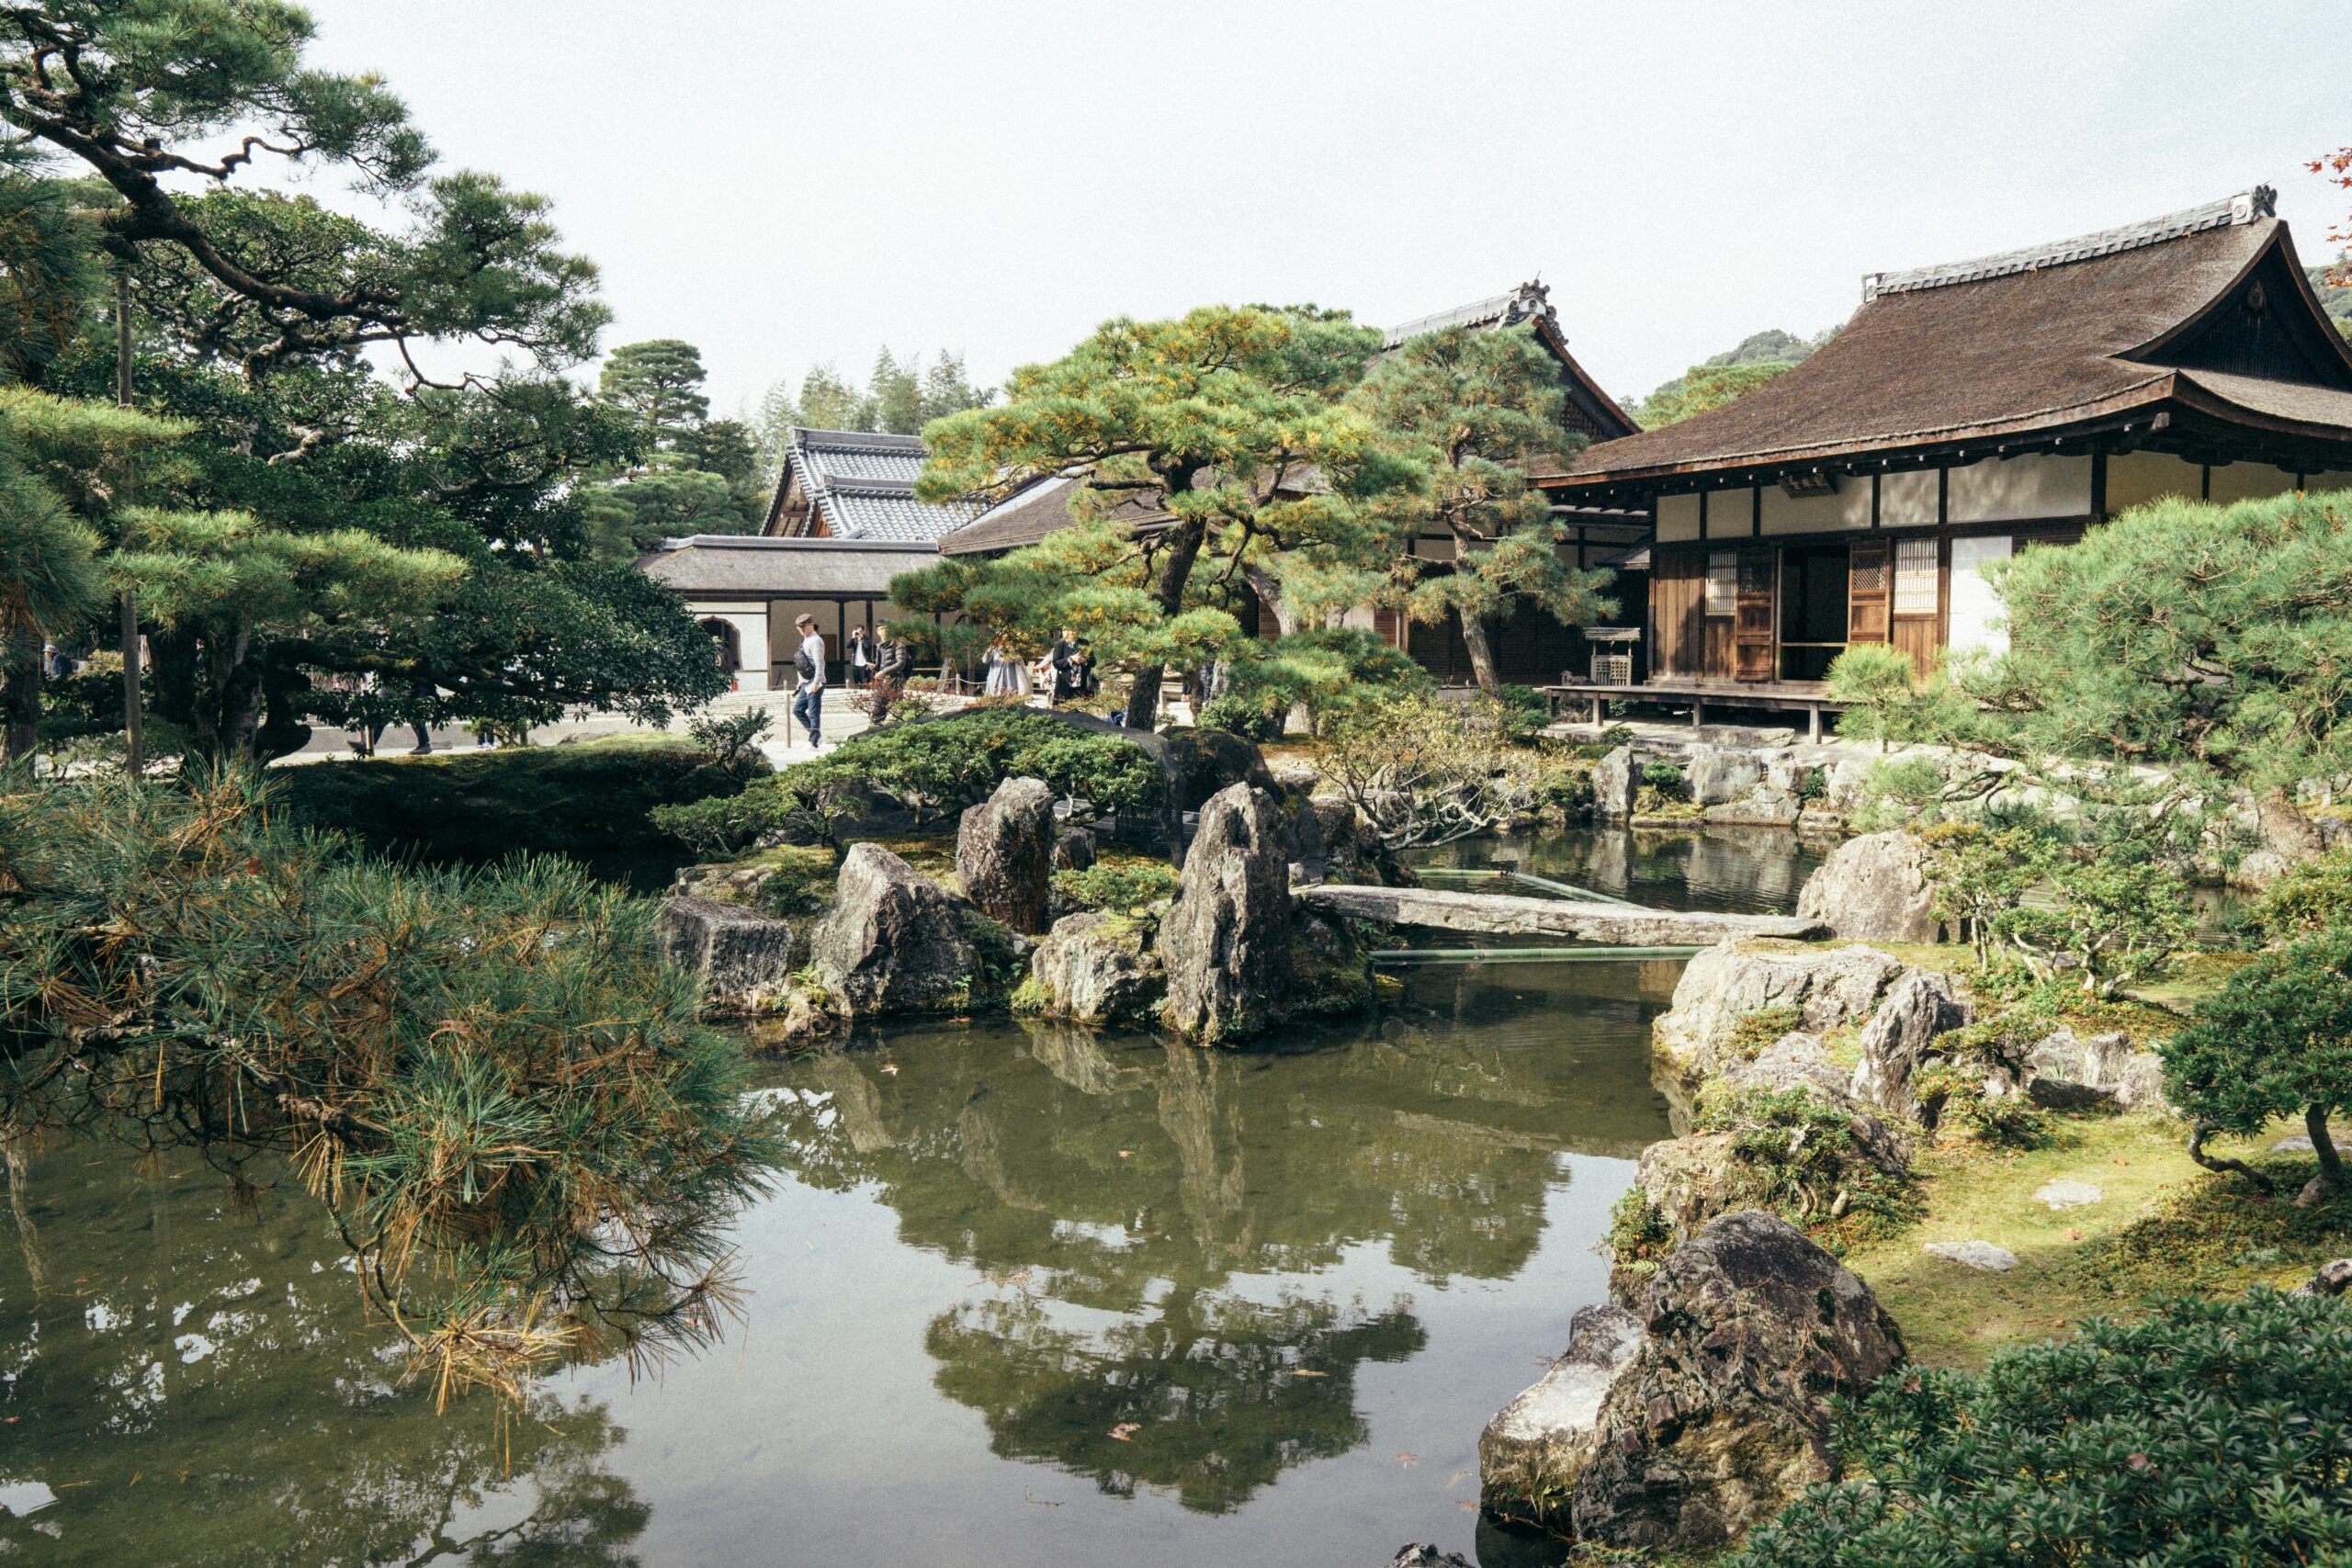 Washington Park – Part 1: The Tranquilizing And Botanical Chinese Garden In Portland, Oregon